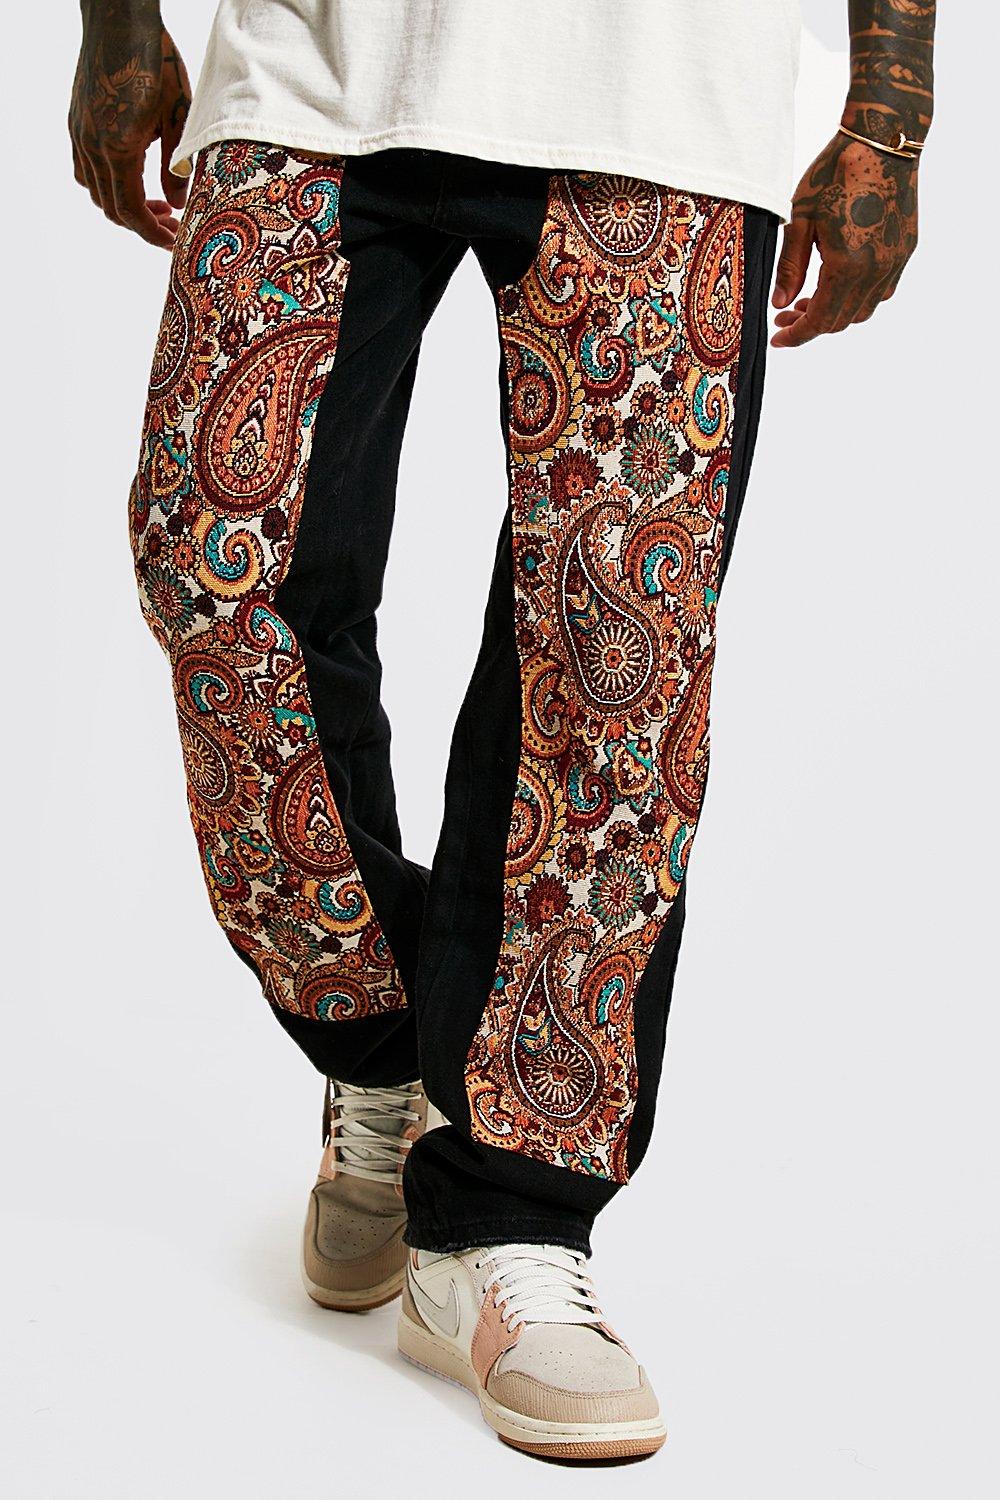 60s – 70s Mens Bell Bottom Jeans, Flares, Disco Pants Mens Relaxed Fit Tapestry Worker Jeans - Black $28.80 AT vintagedancer.com